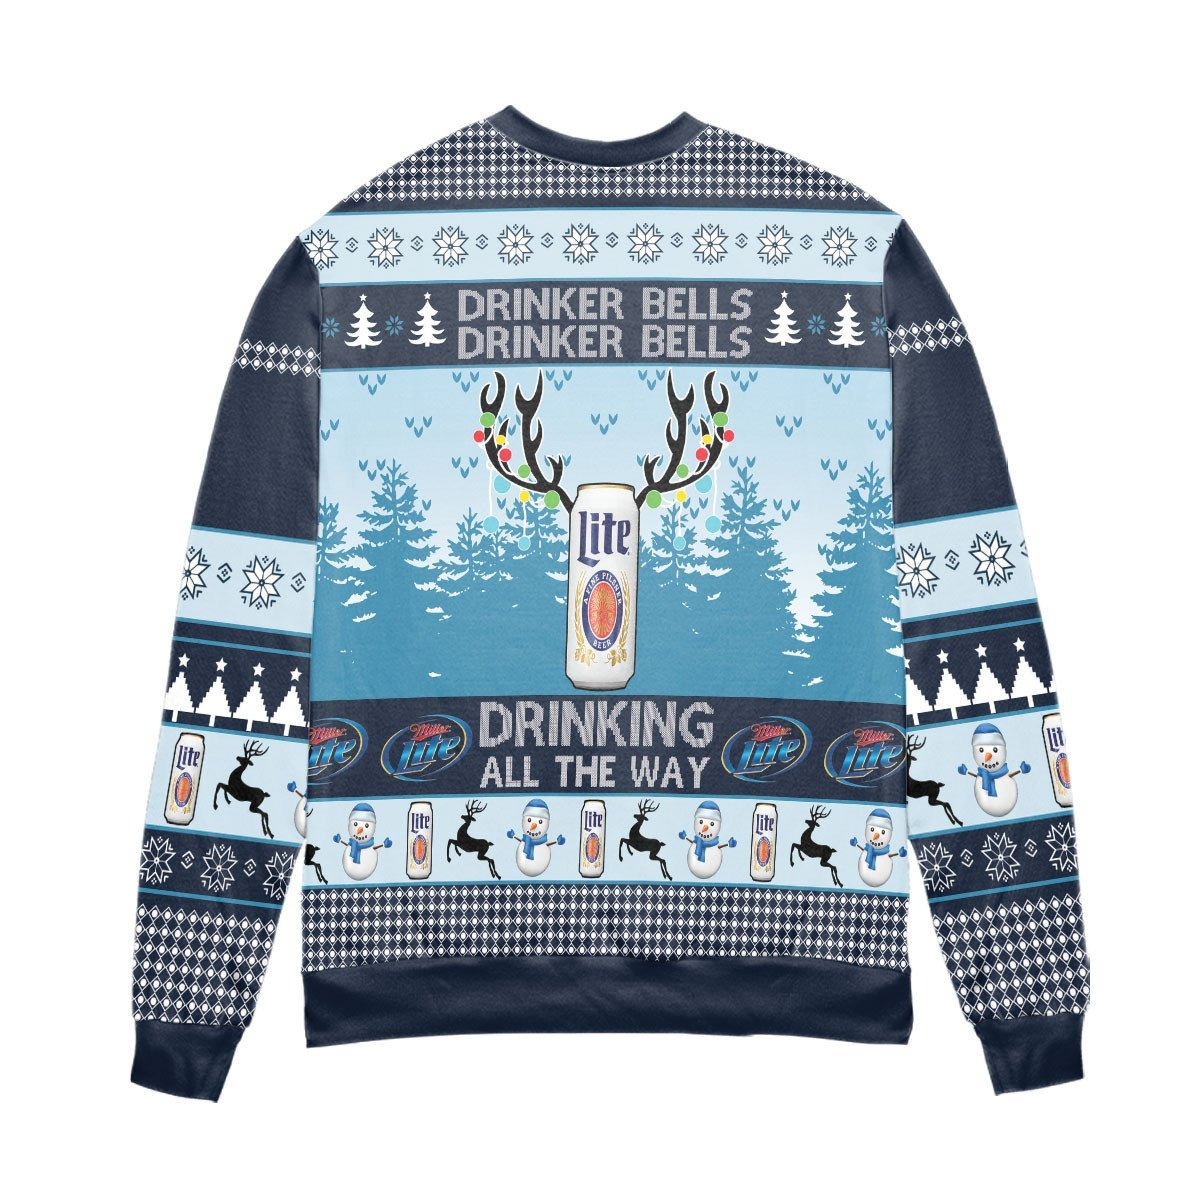 Miller Lite Drinker Bells Drinking All The Way Christmas Sweater